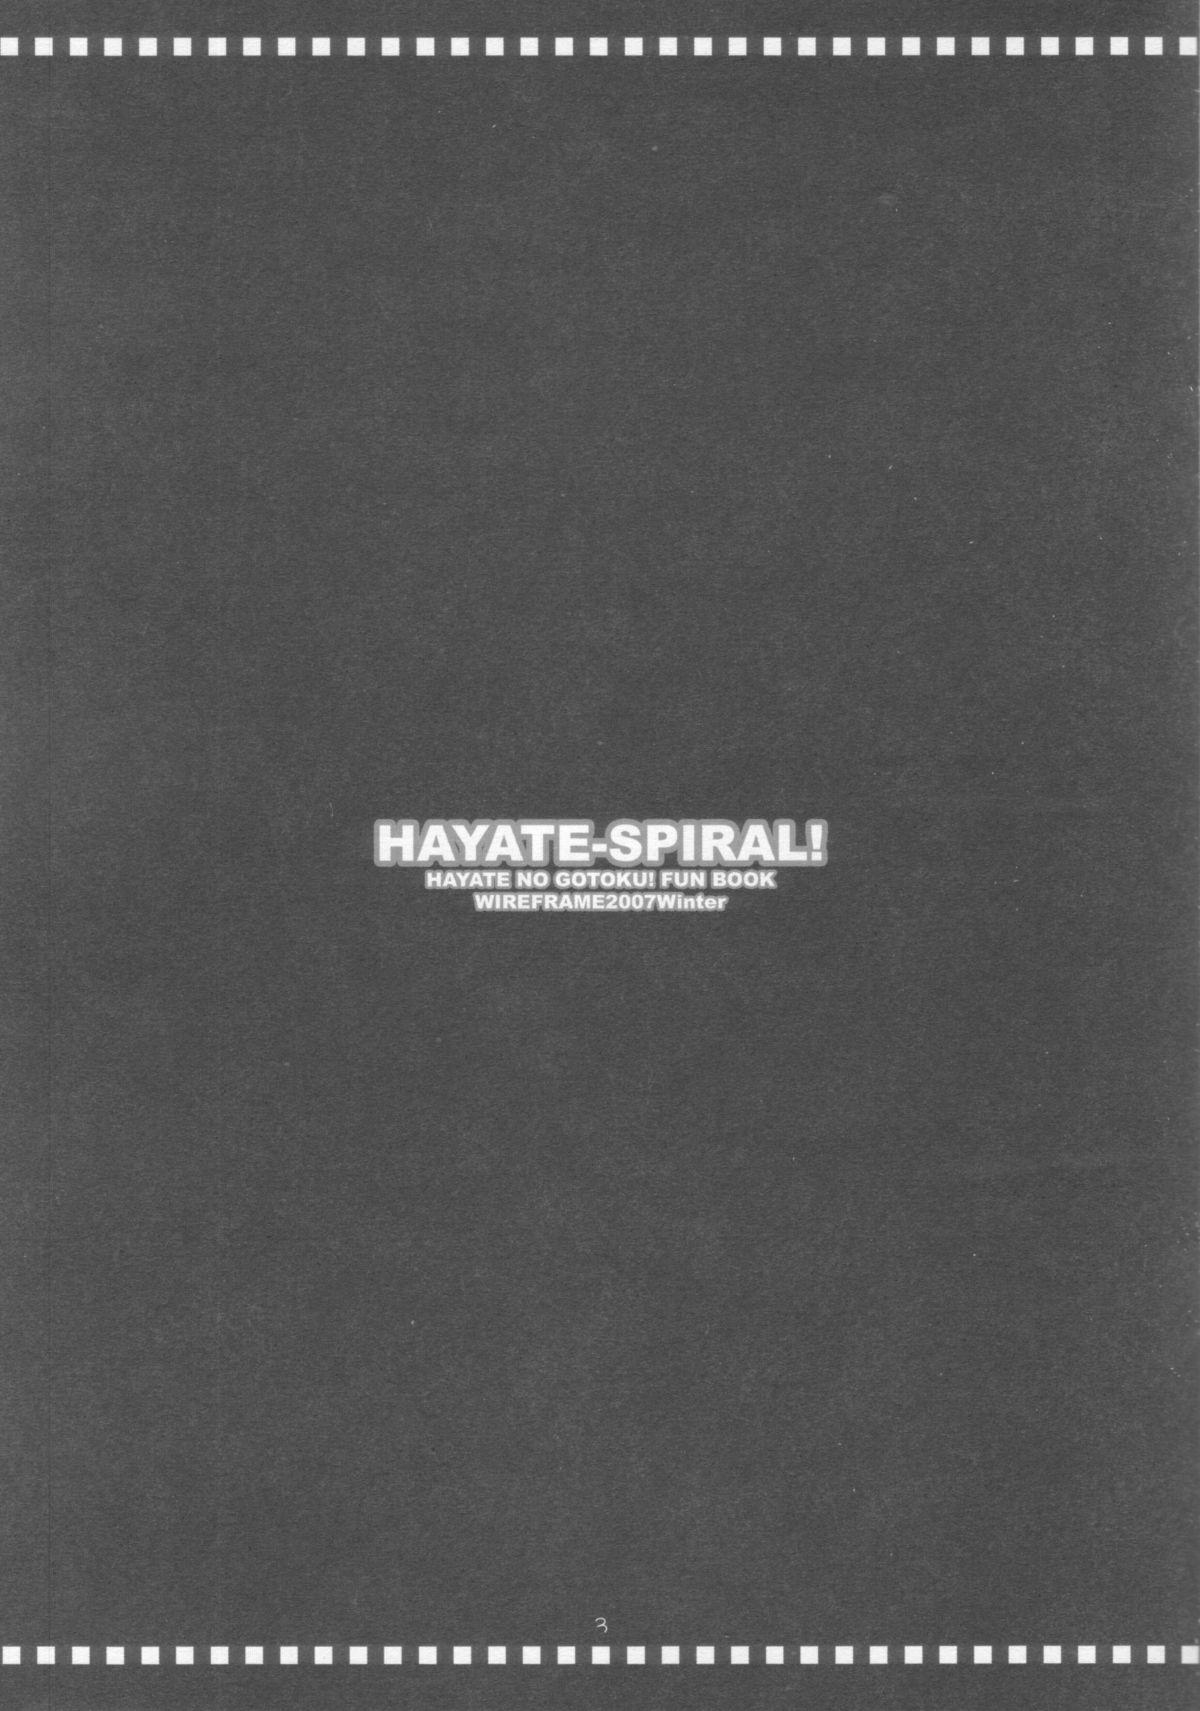 HAYATE-SPIRAL! 1